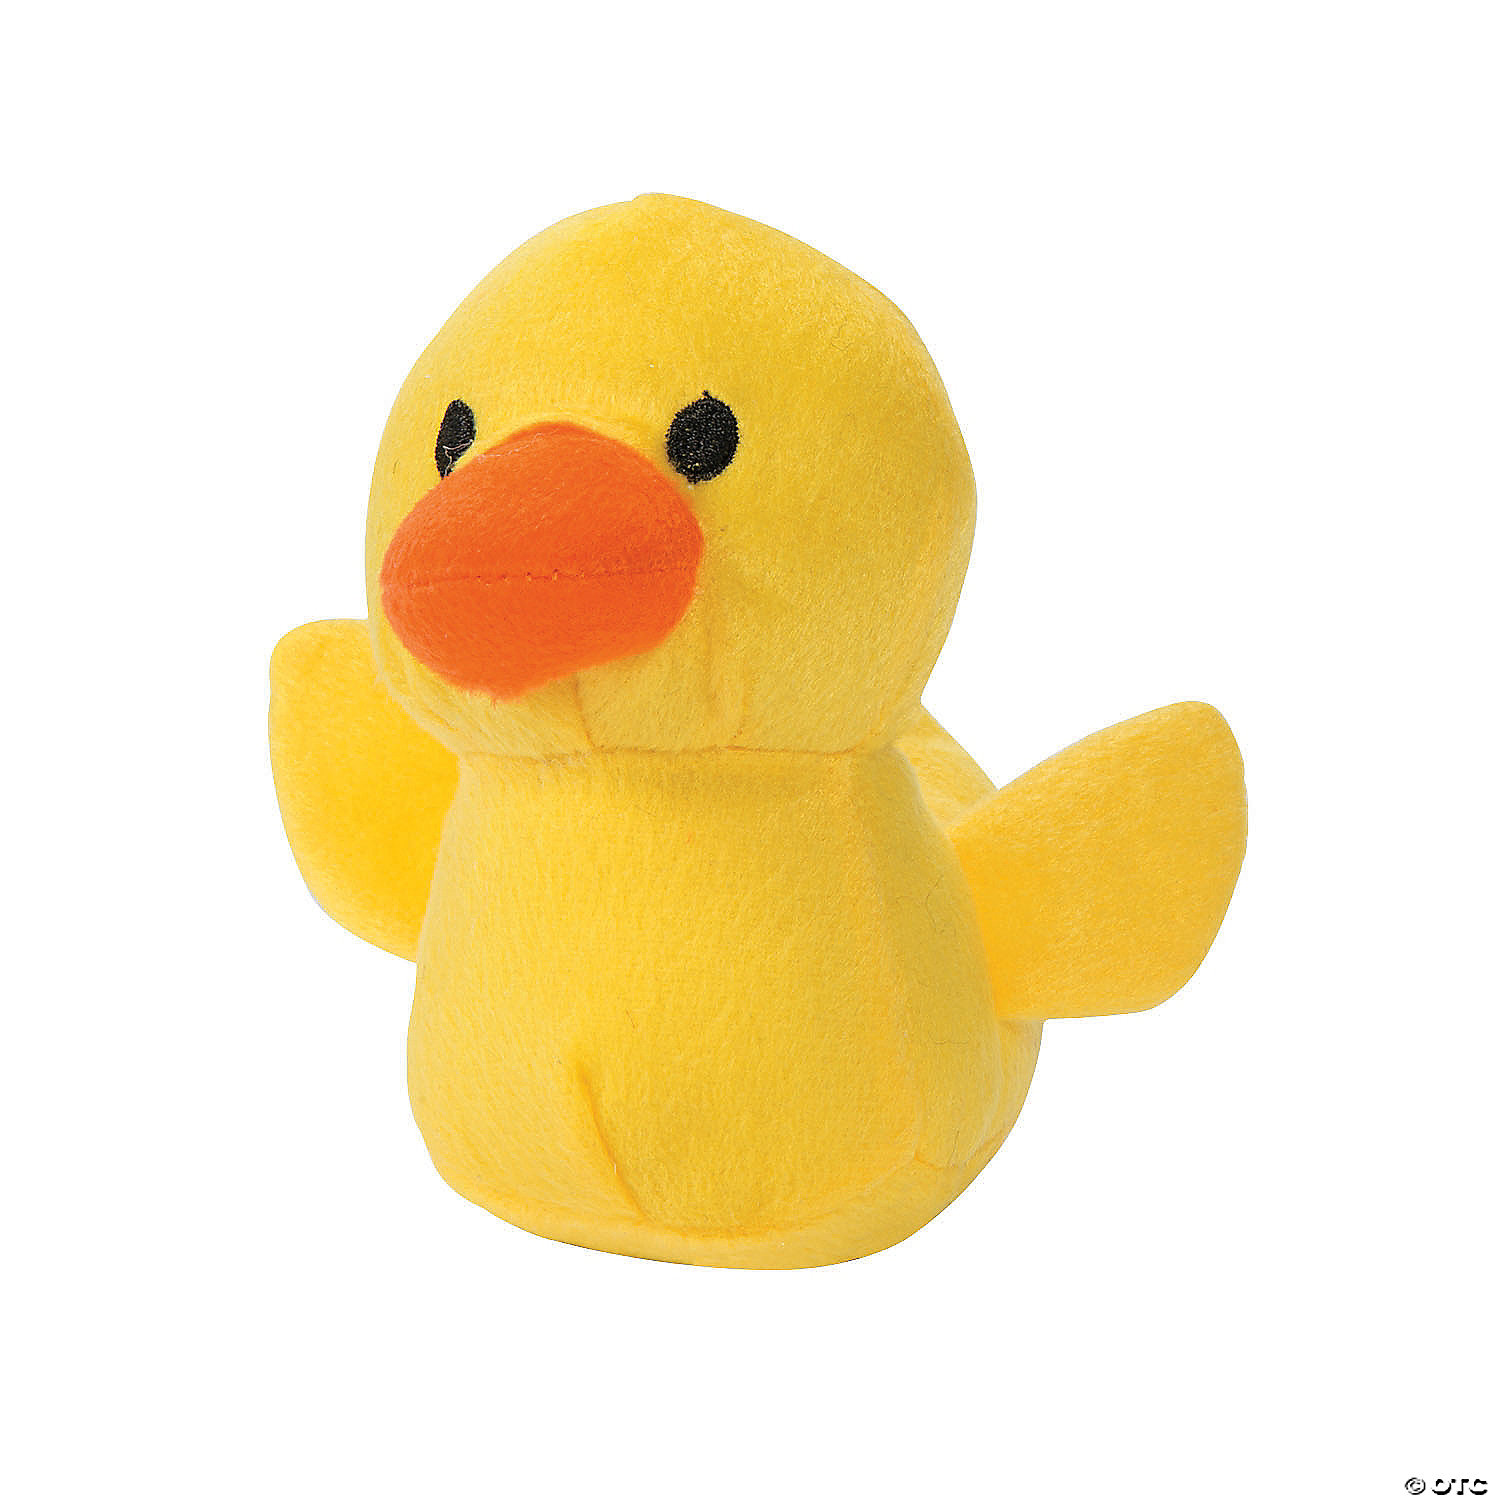 rubber duck stuffed animal